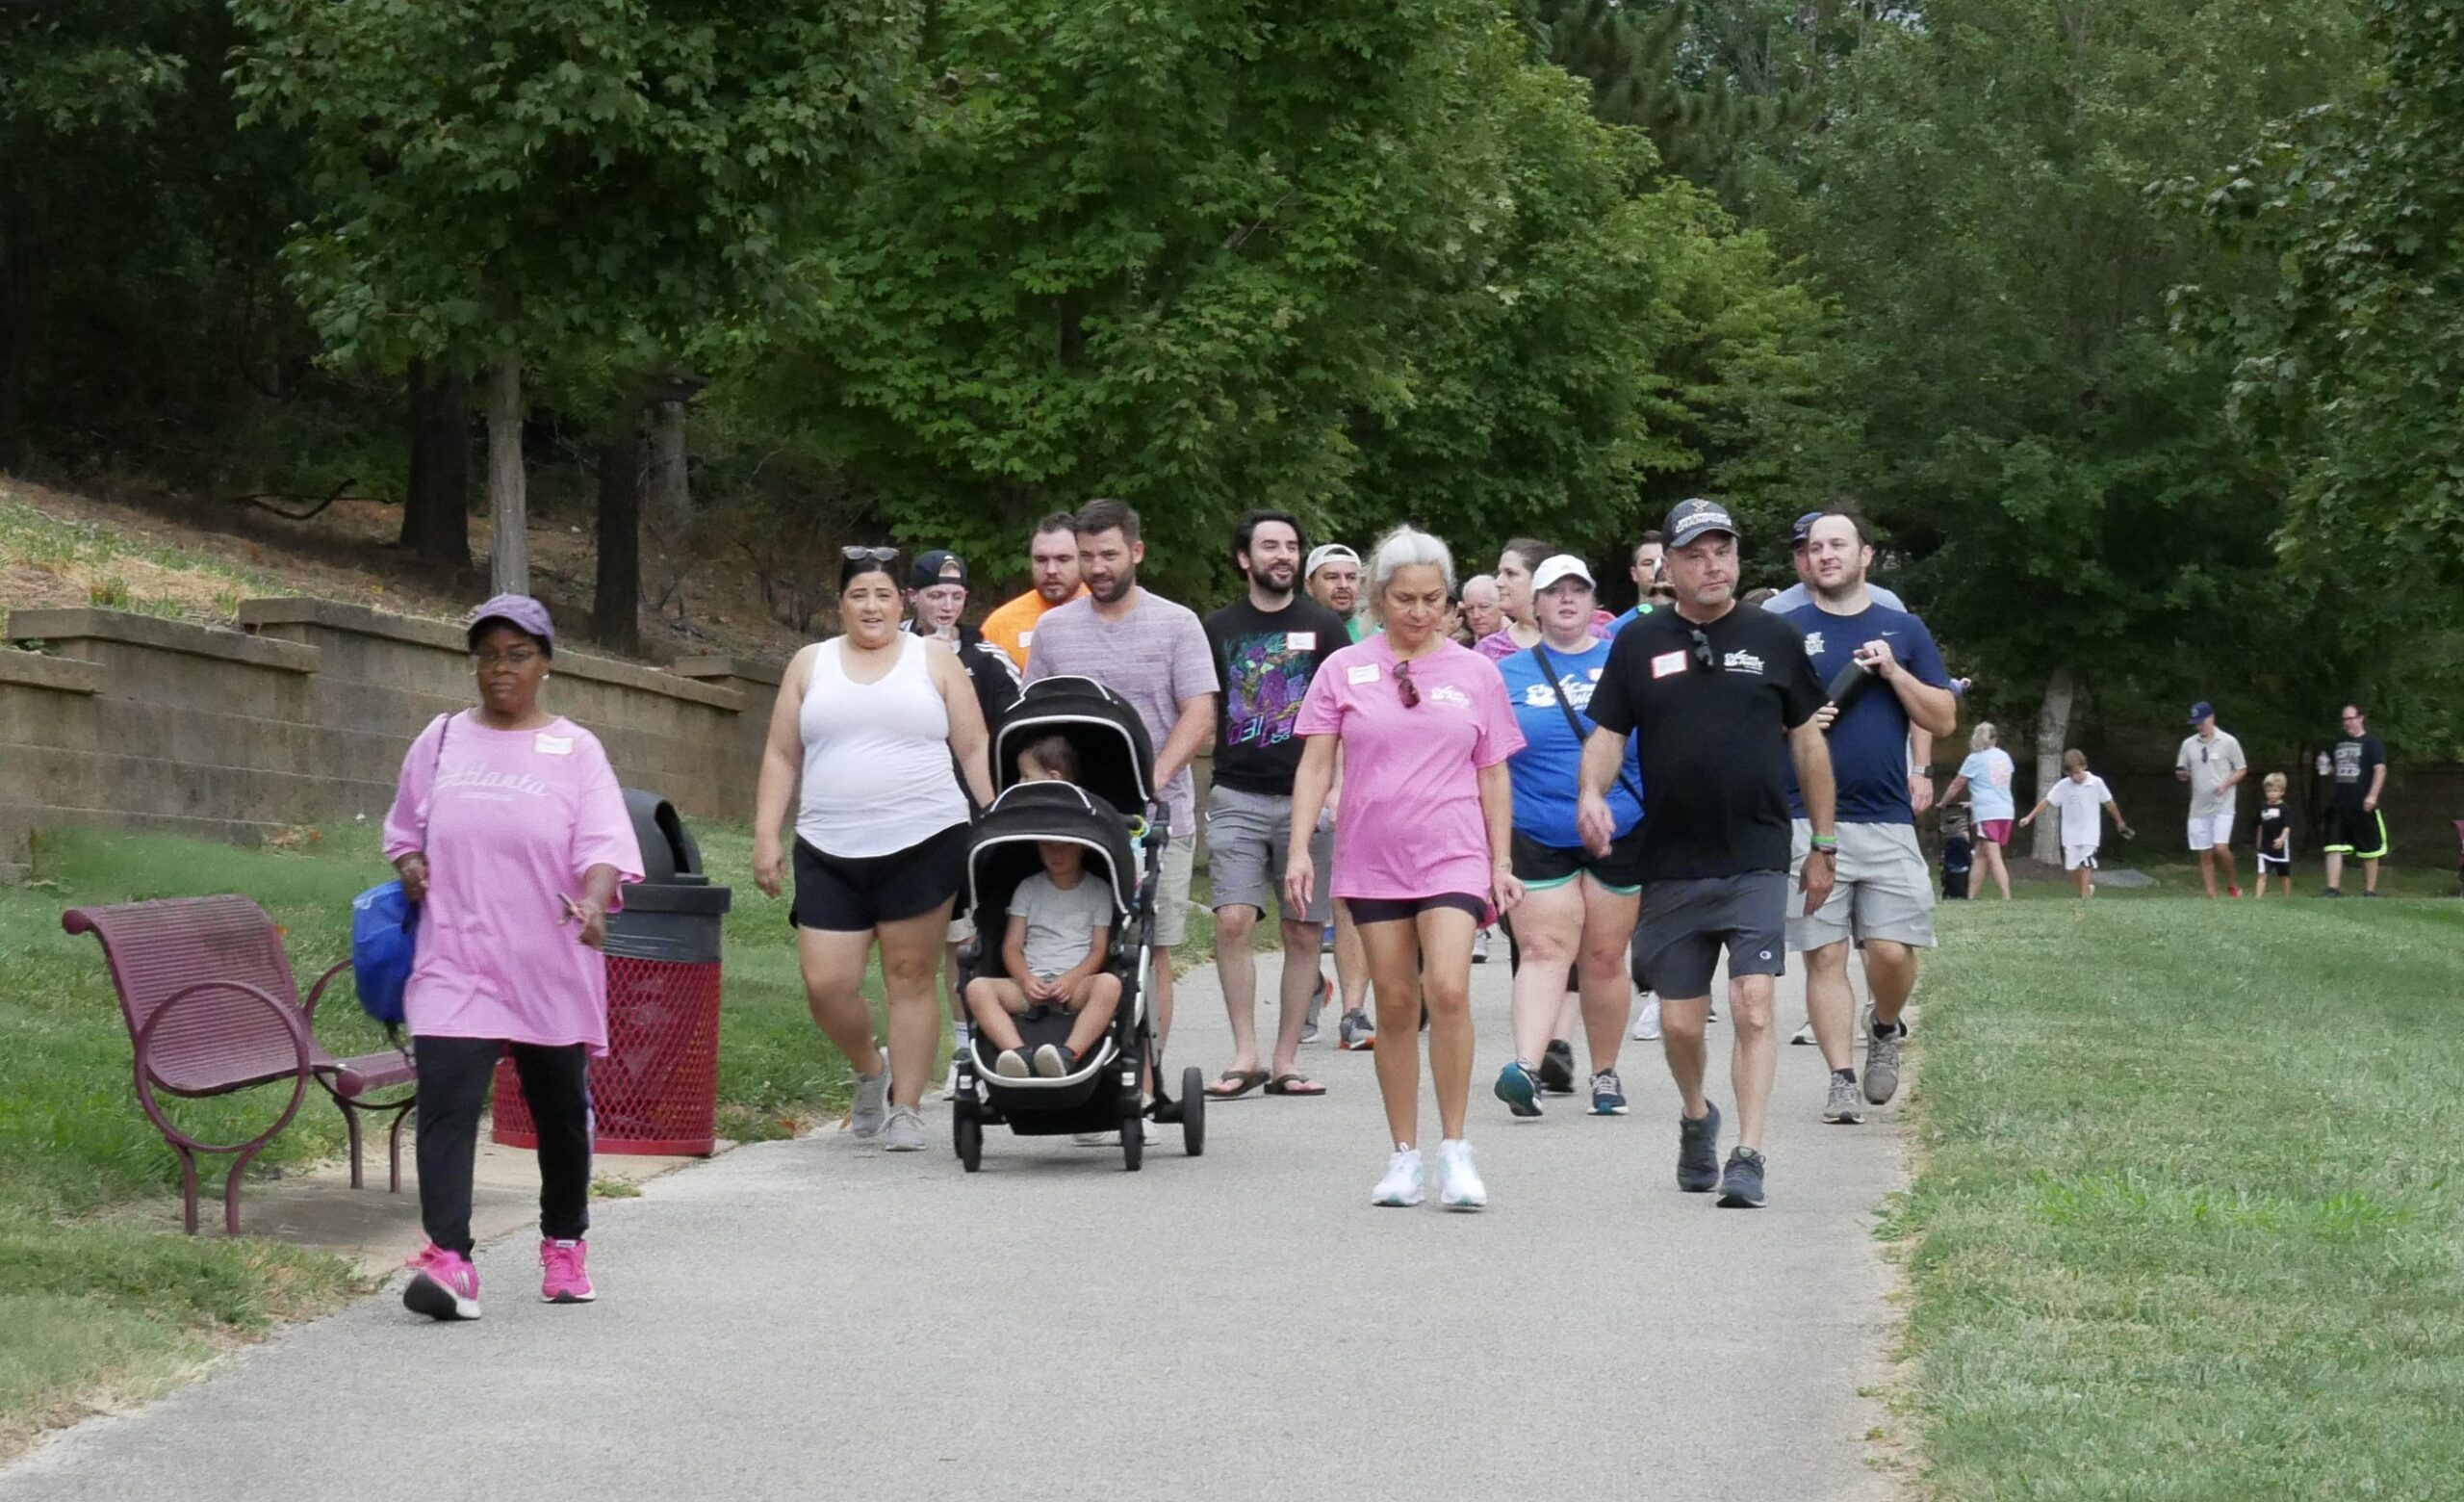 Child Care Aware of Missouri Hosts Walk Fundraiser